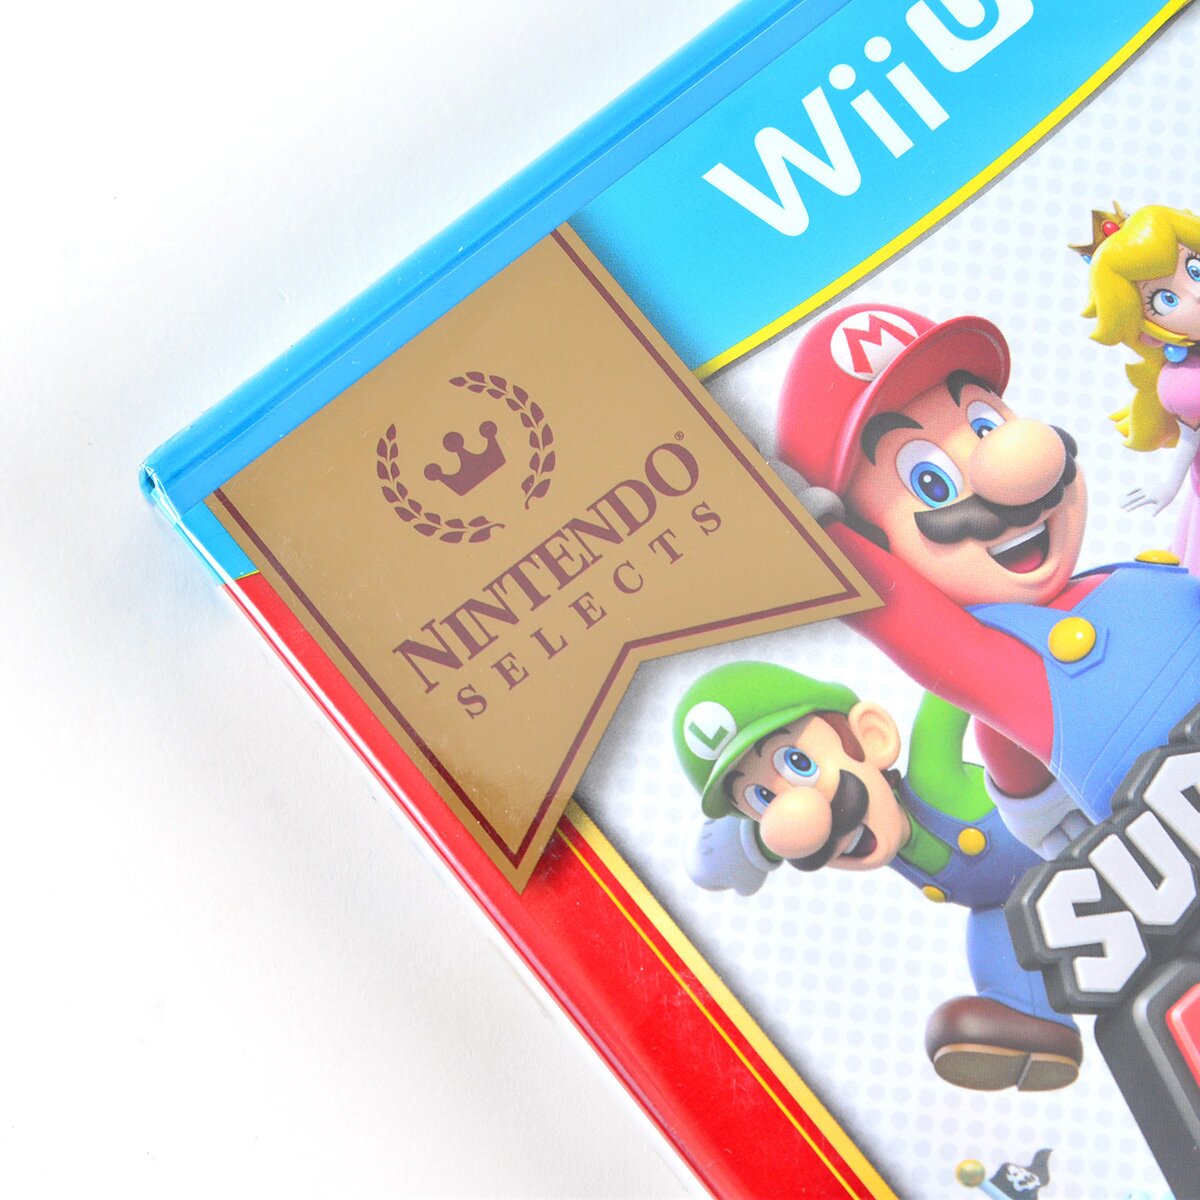 Nintendo Selects: Super Mario 3D World